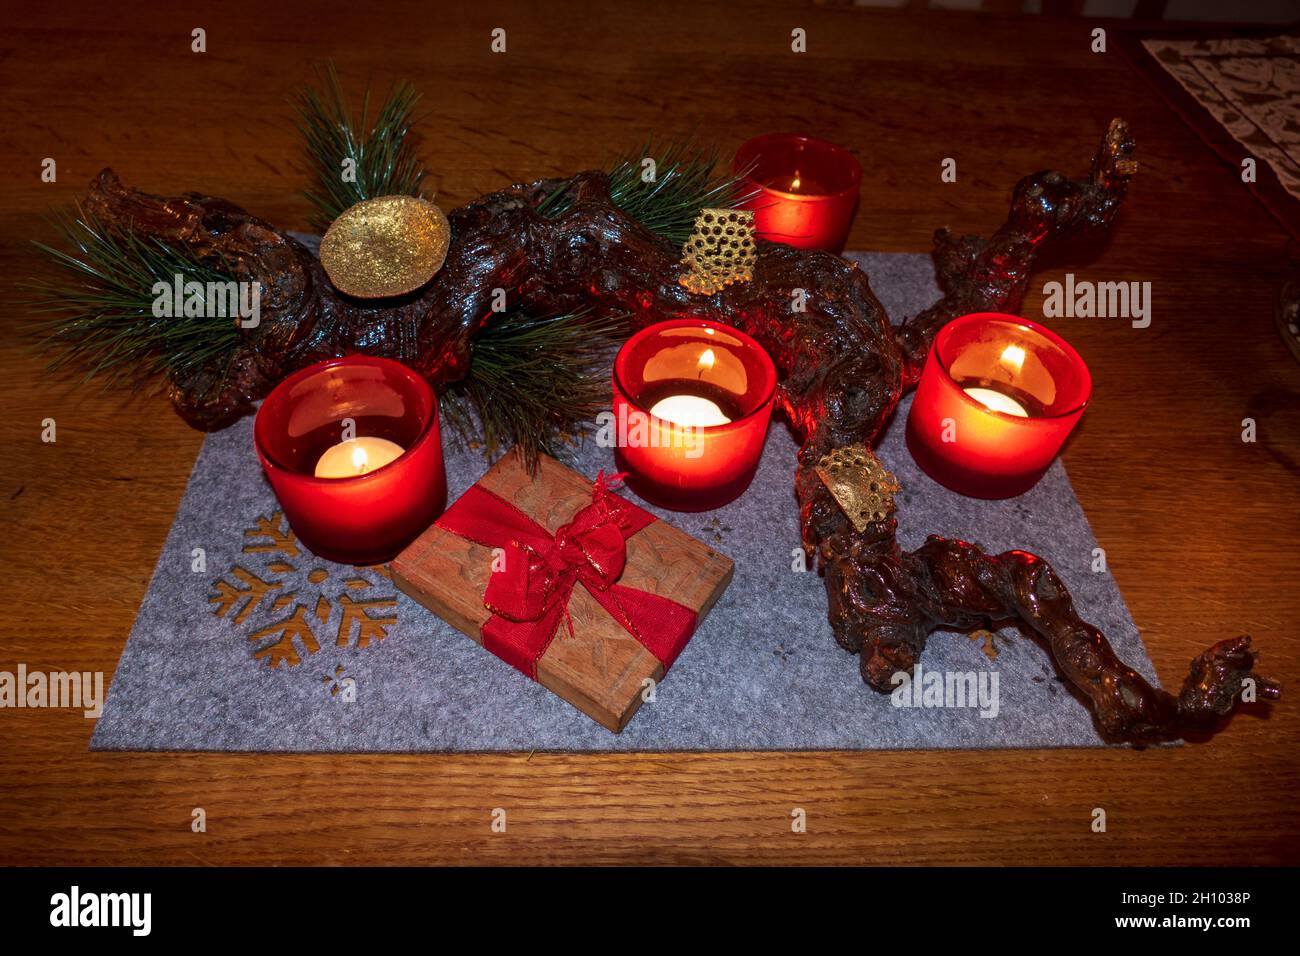 Rebwurzel, Model und Kerzen zum Adventsgesteck dekoriert Stock Photo